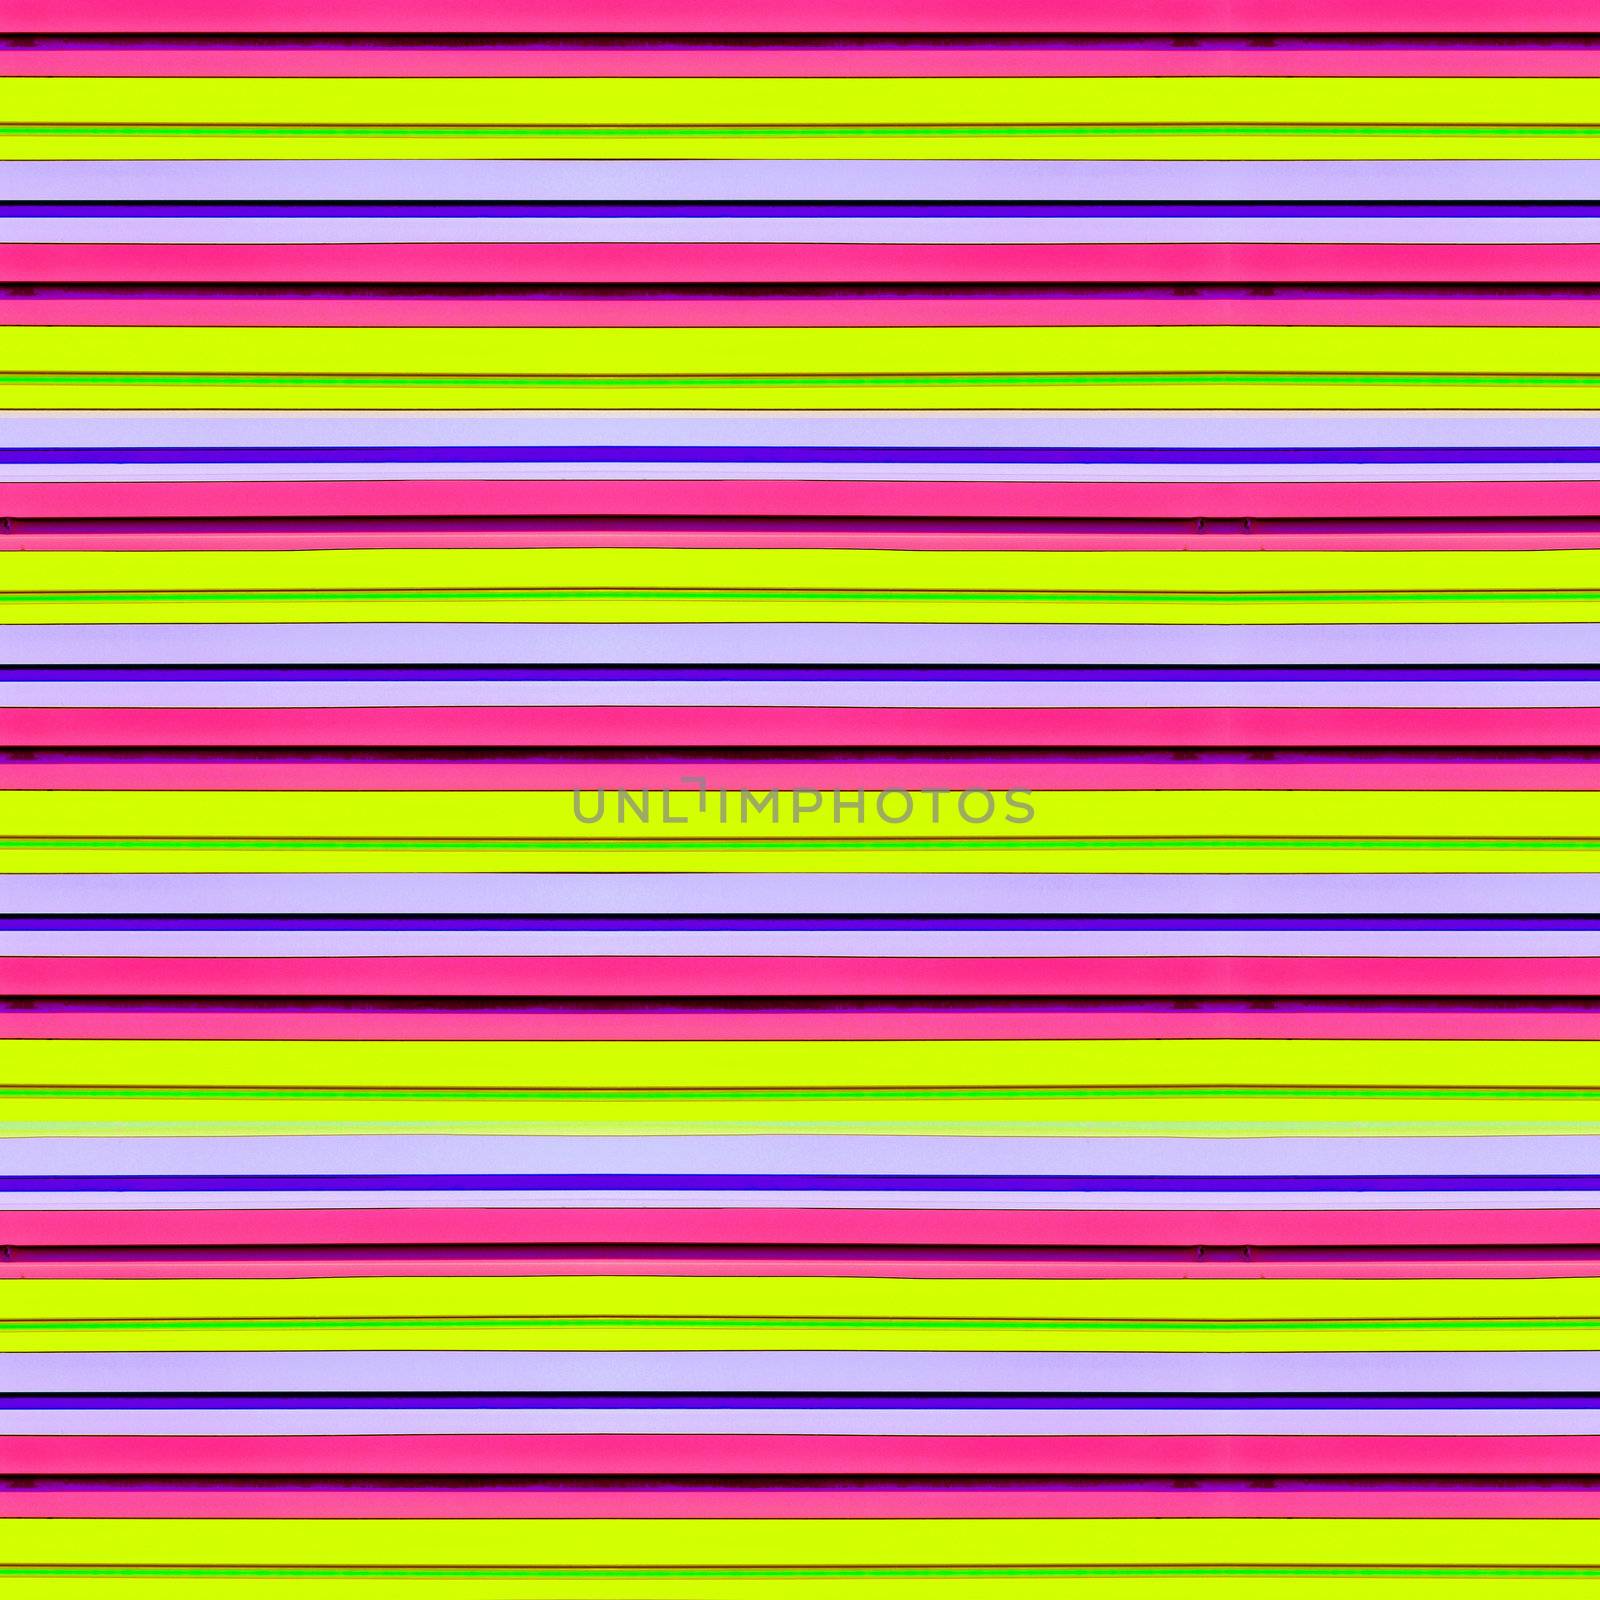 striped multicolored background. bright pattern